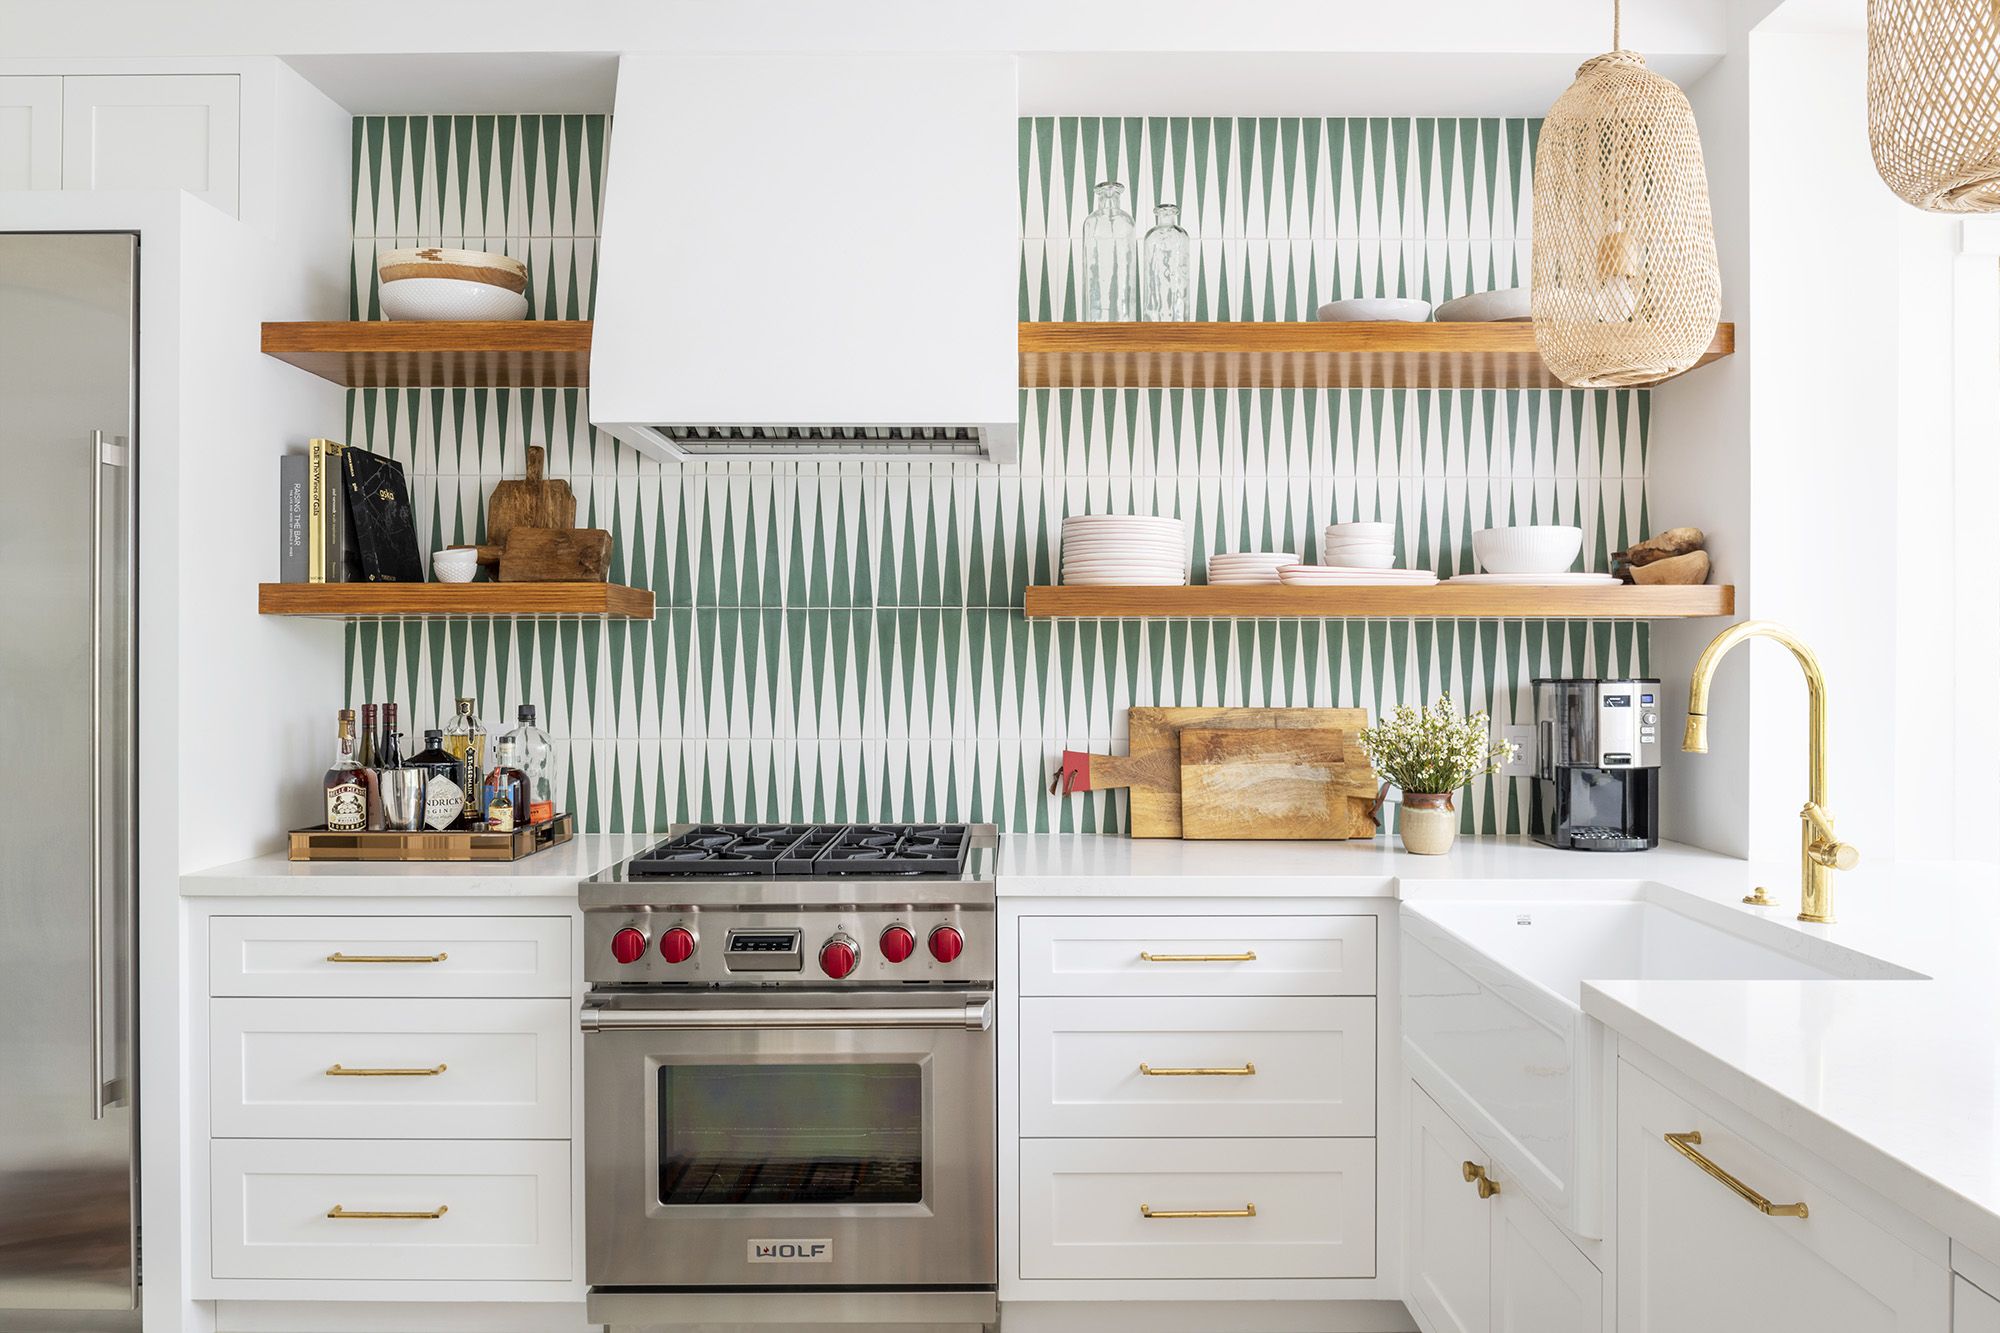 52 Best Small Kitchen Design Ideas - Tiny Kitchen Decorating